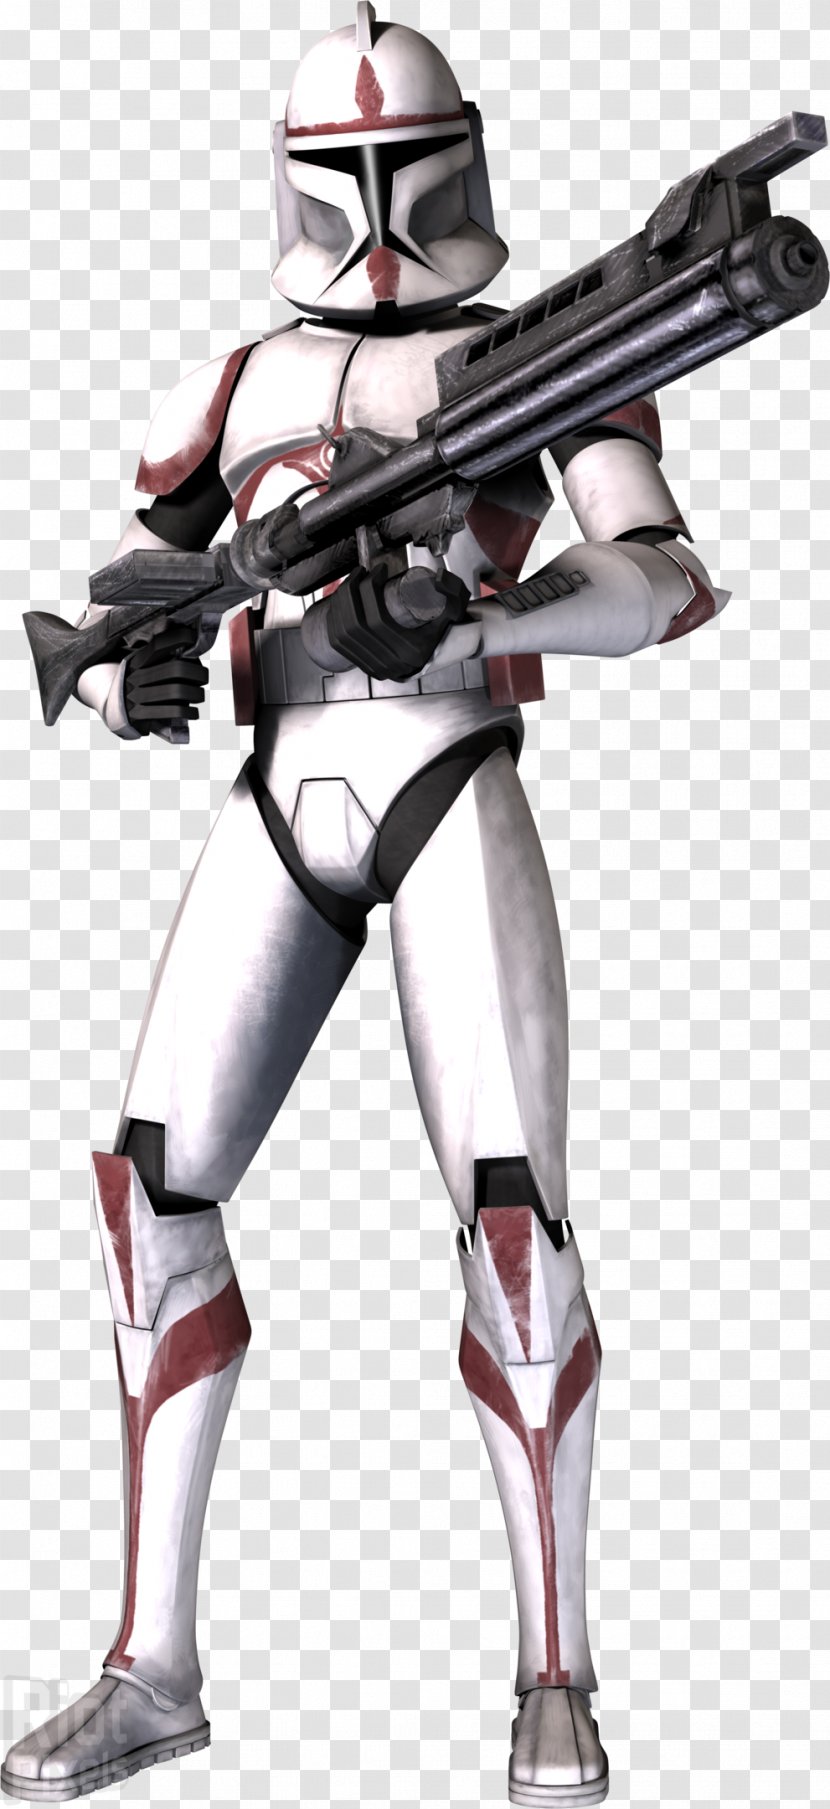 Clone Trooper Star Wars: The Wars Captain Rex Commander Cody Transparent PNG